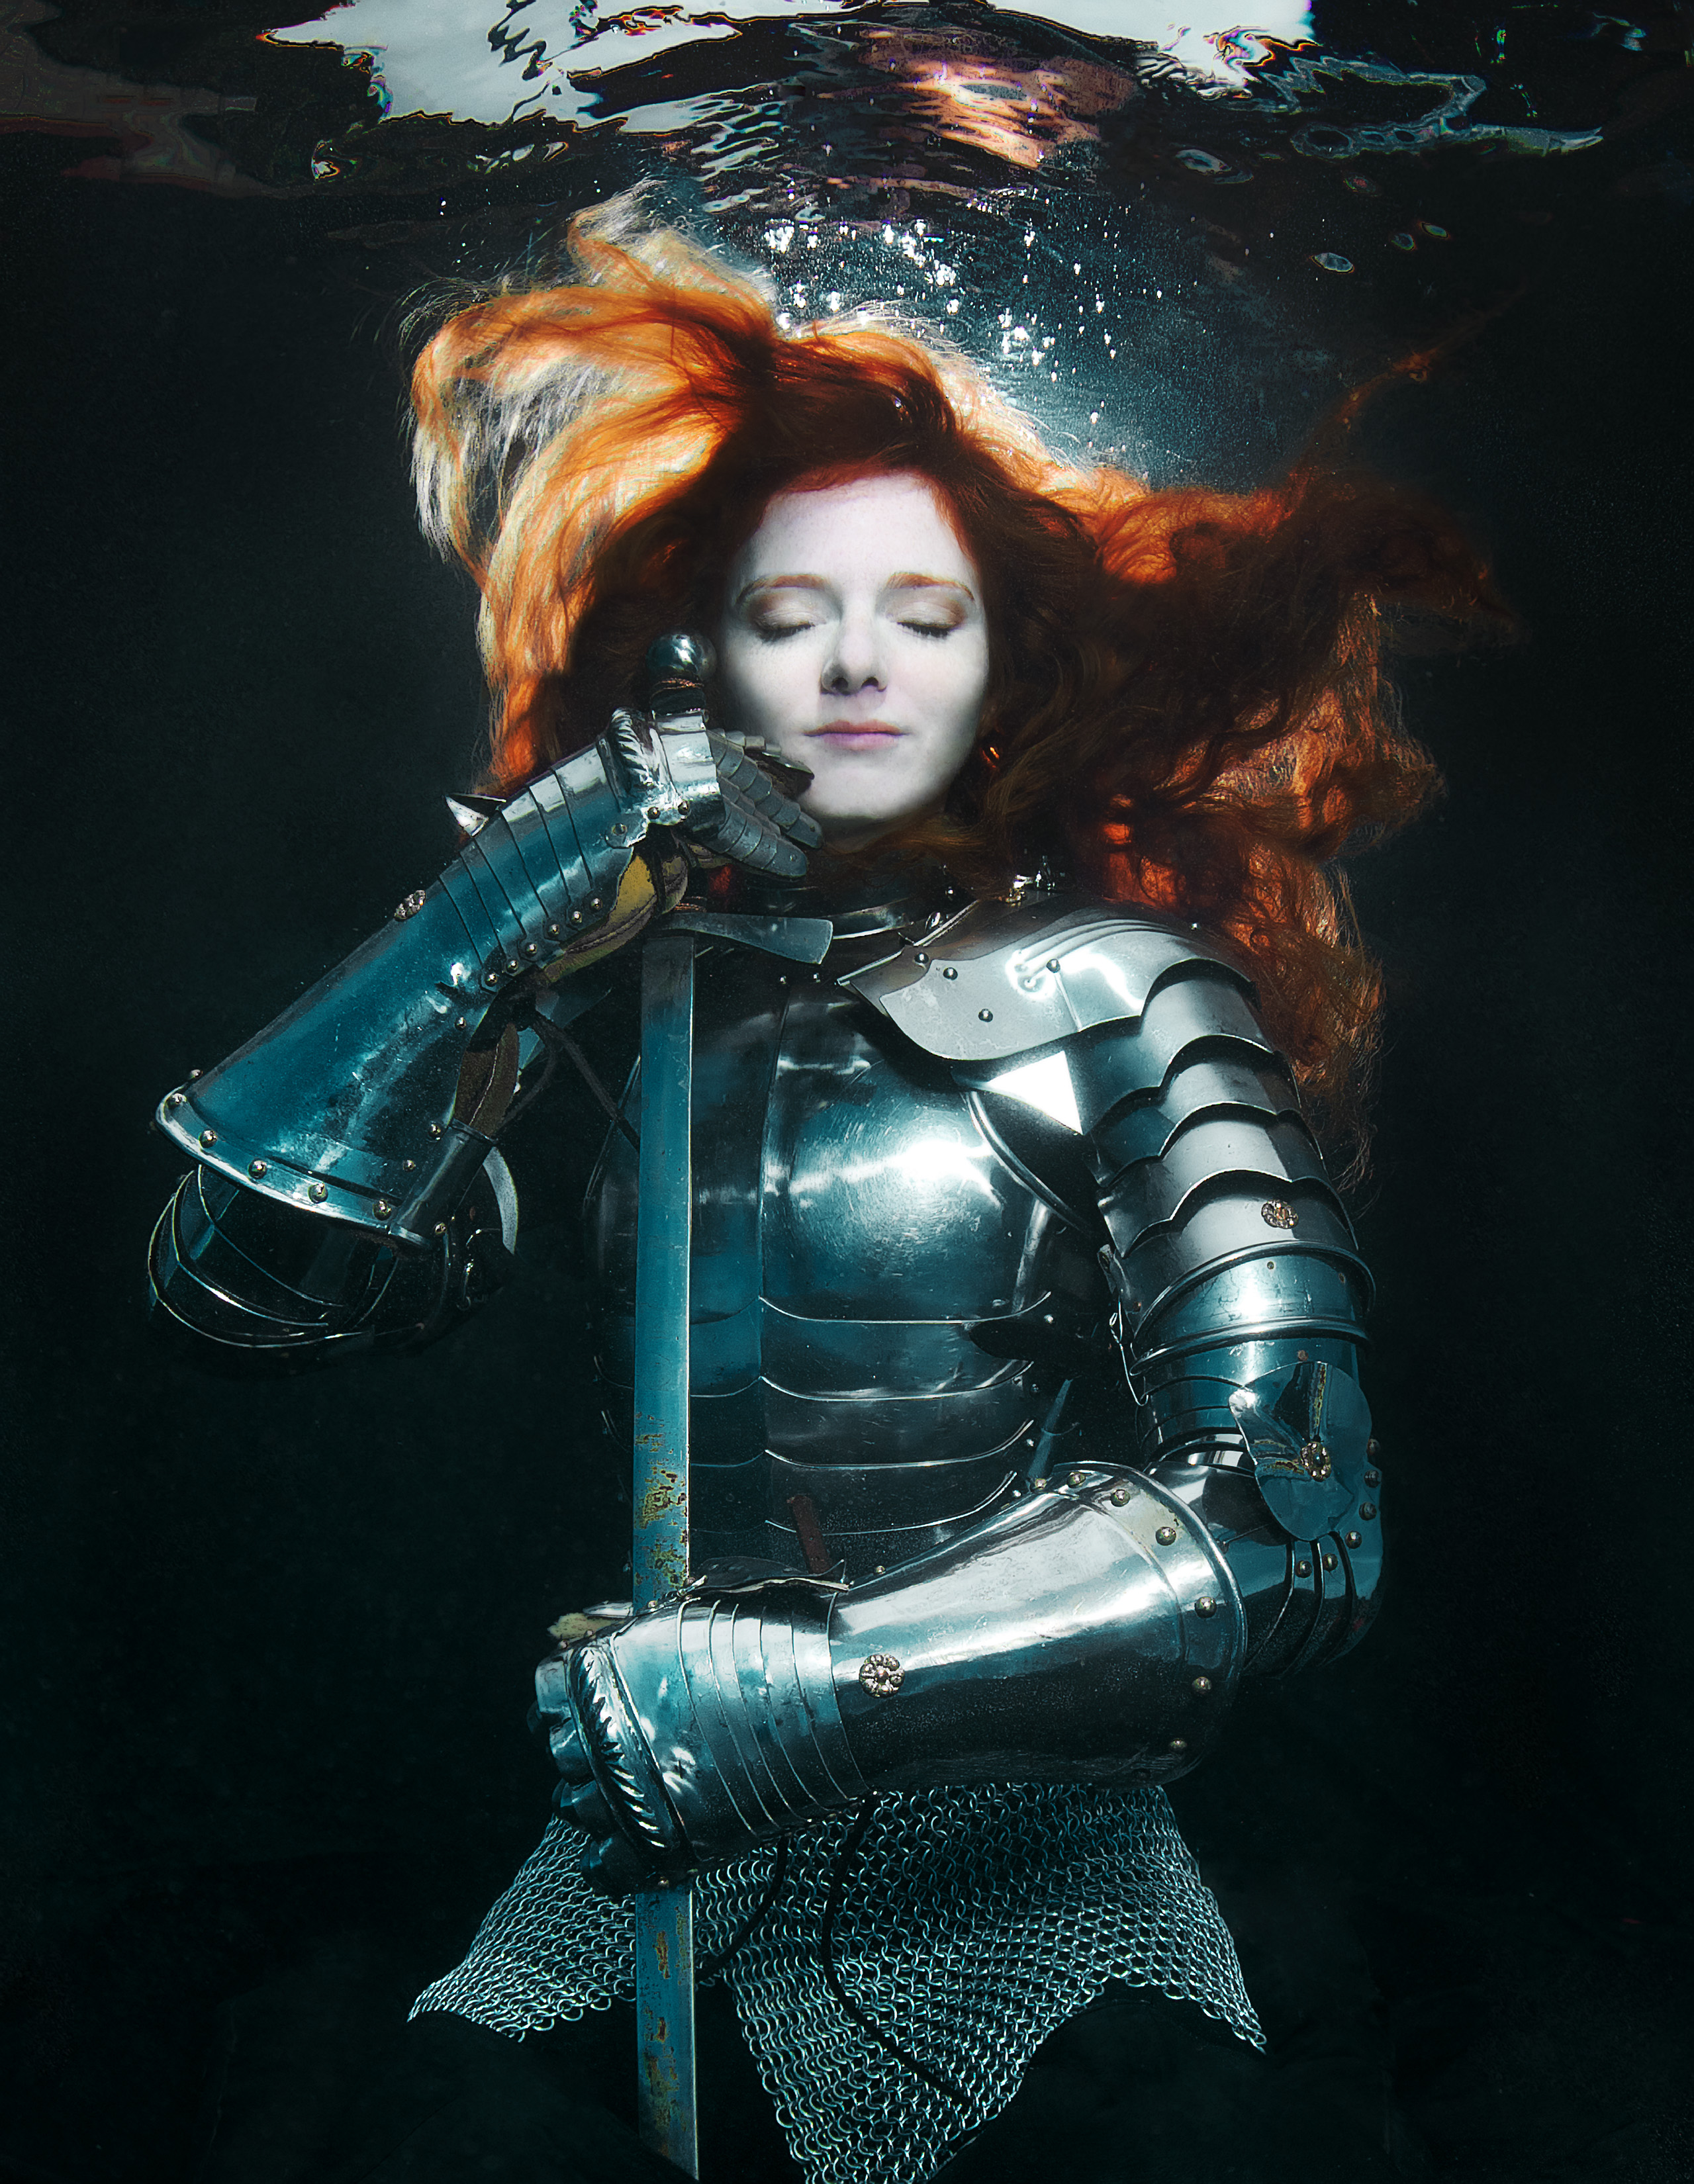 PADI-certified diver Virginia Hankins modeling underwater in armor